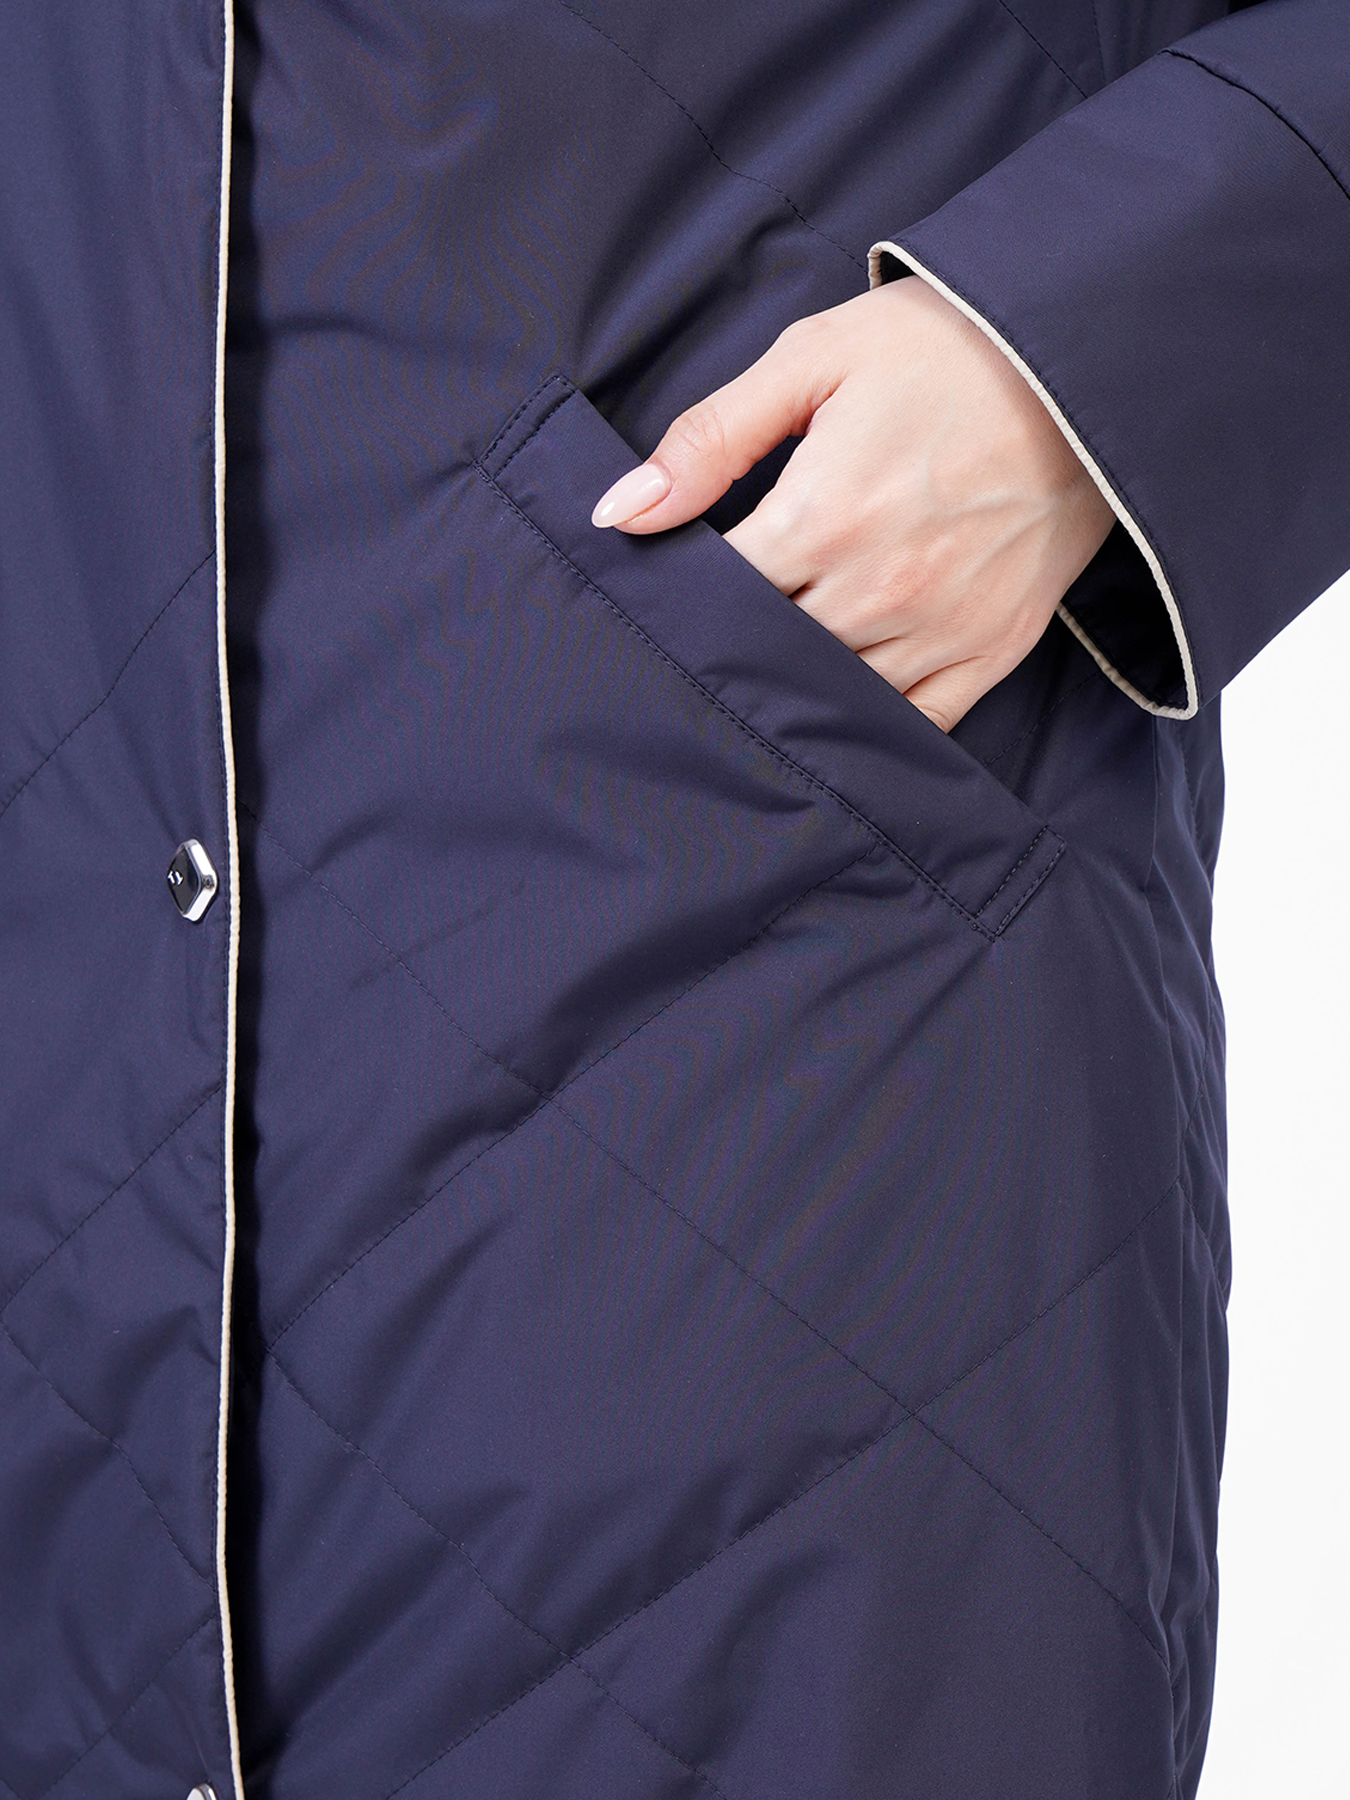 Пальто Maritta 418364-021, цвет темно-синий, размер 46 - фото 5